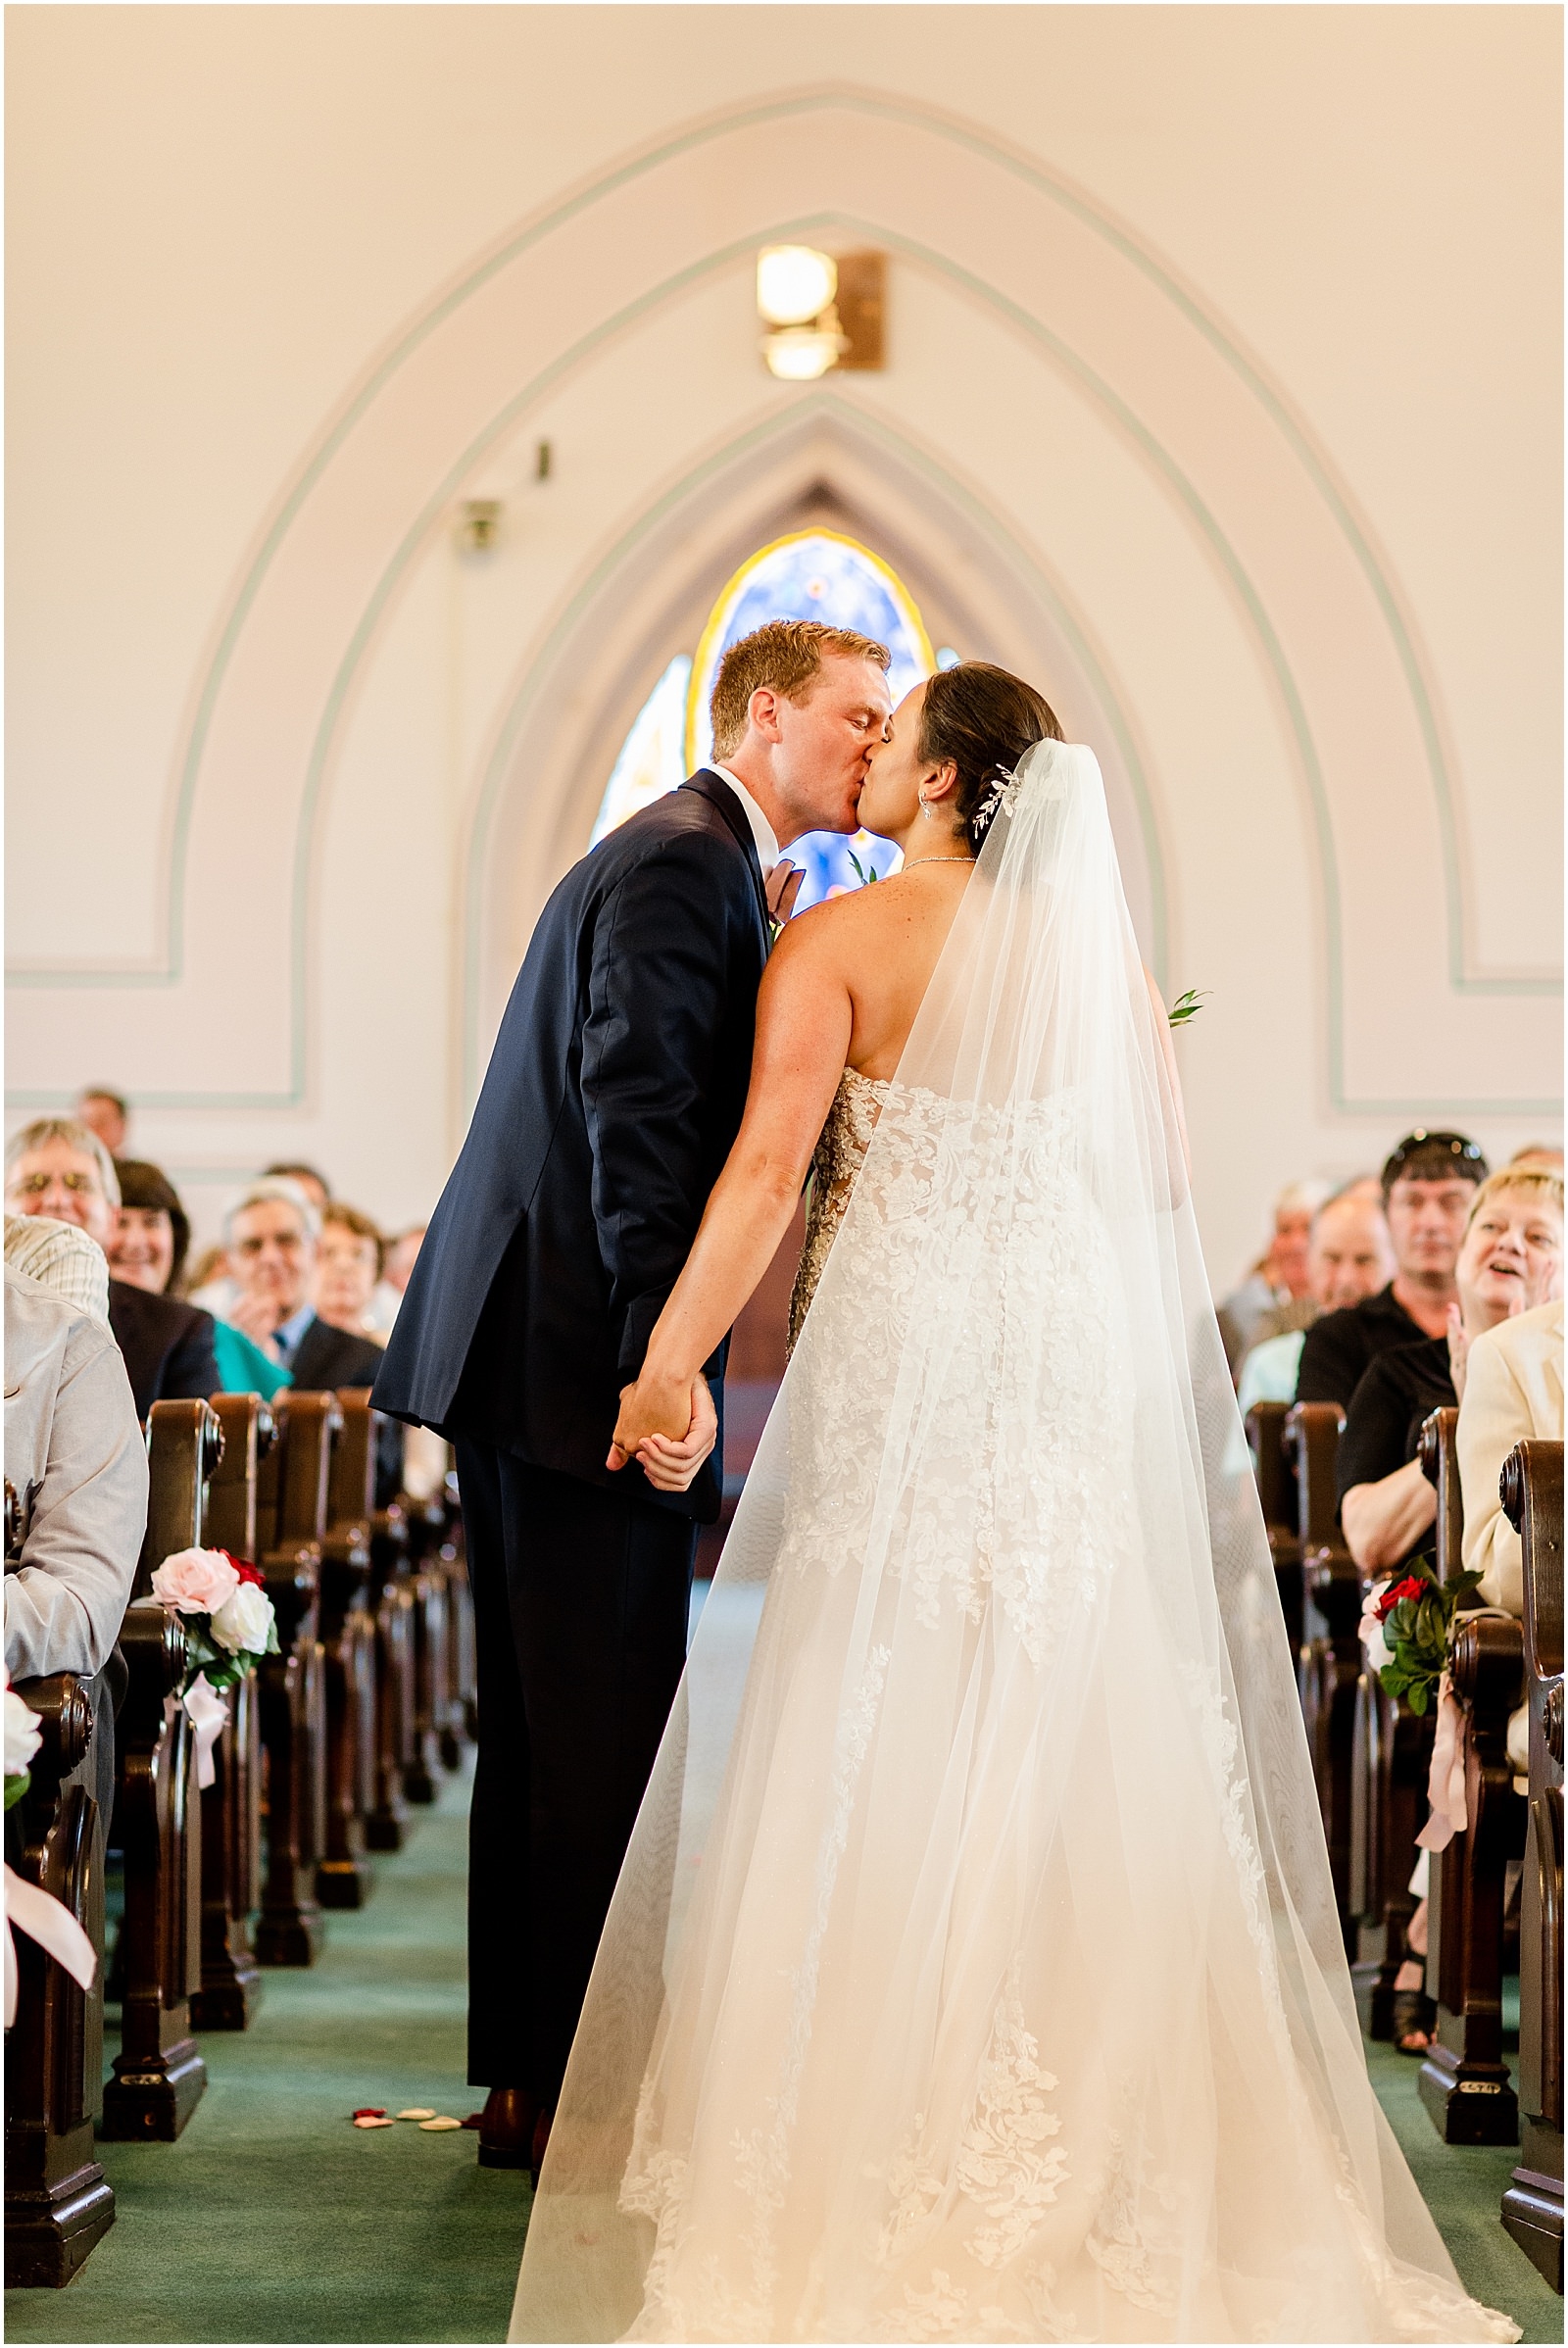 Deidra and Andrew | A Huntingburgh Indiana Wedding Bret and Brandie | Evansville Photographers | @bretandbrandie-0113.jpg